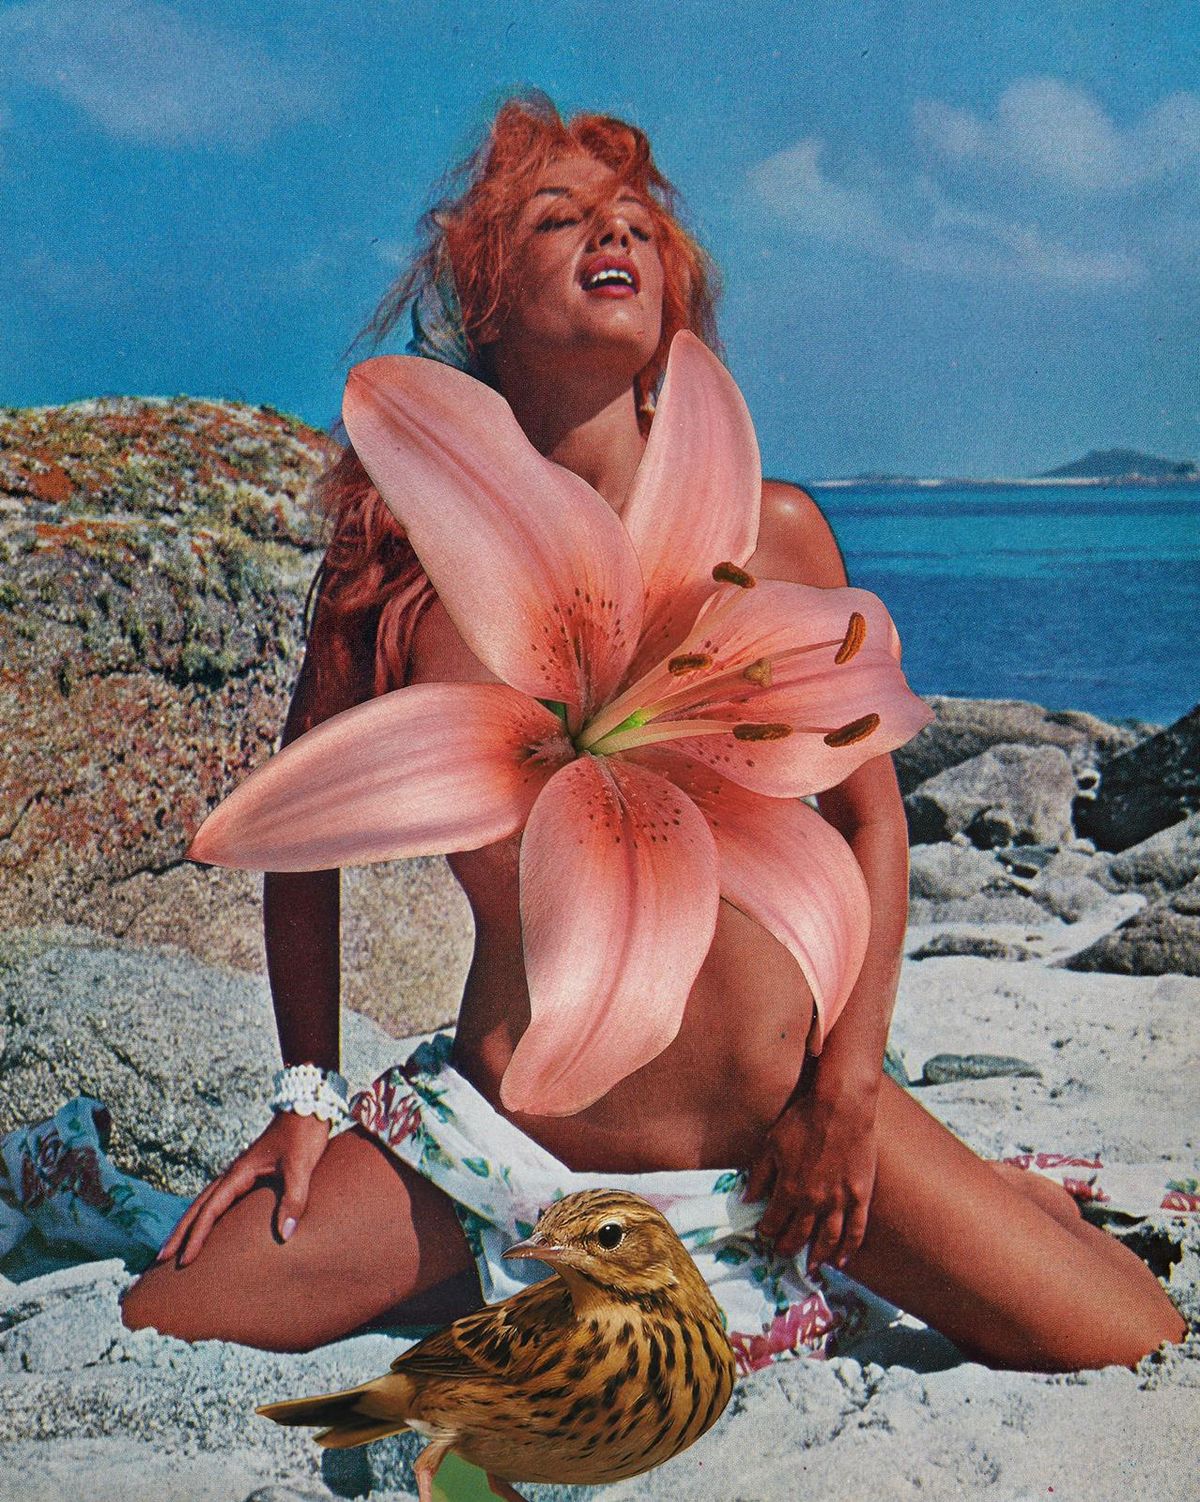 Vimeo Nude Beach - Linder goes 'au naturel' for erotic Tuscan exhibition